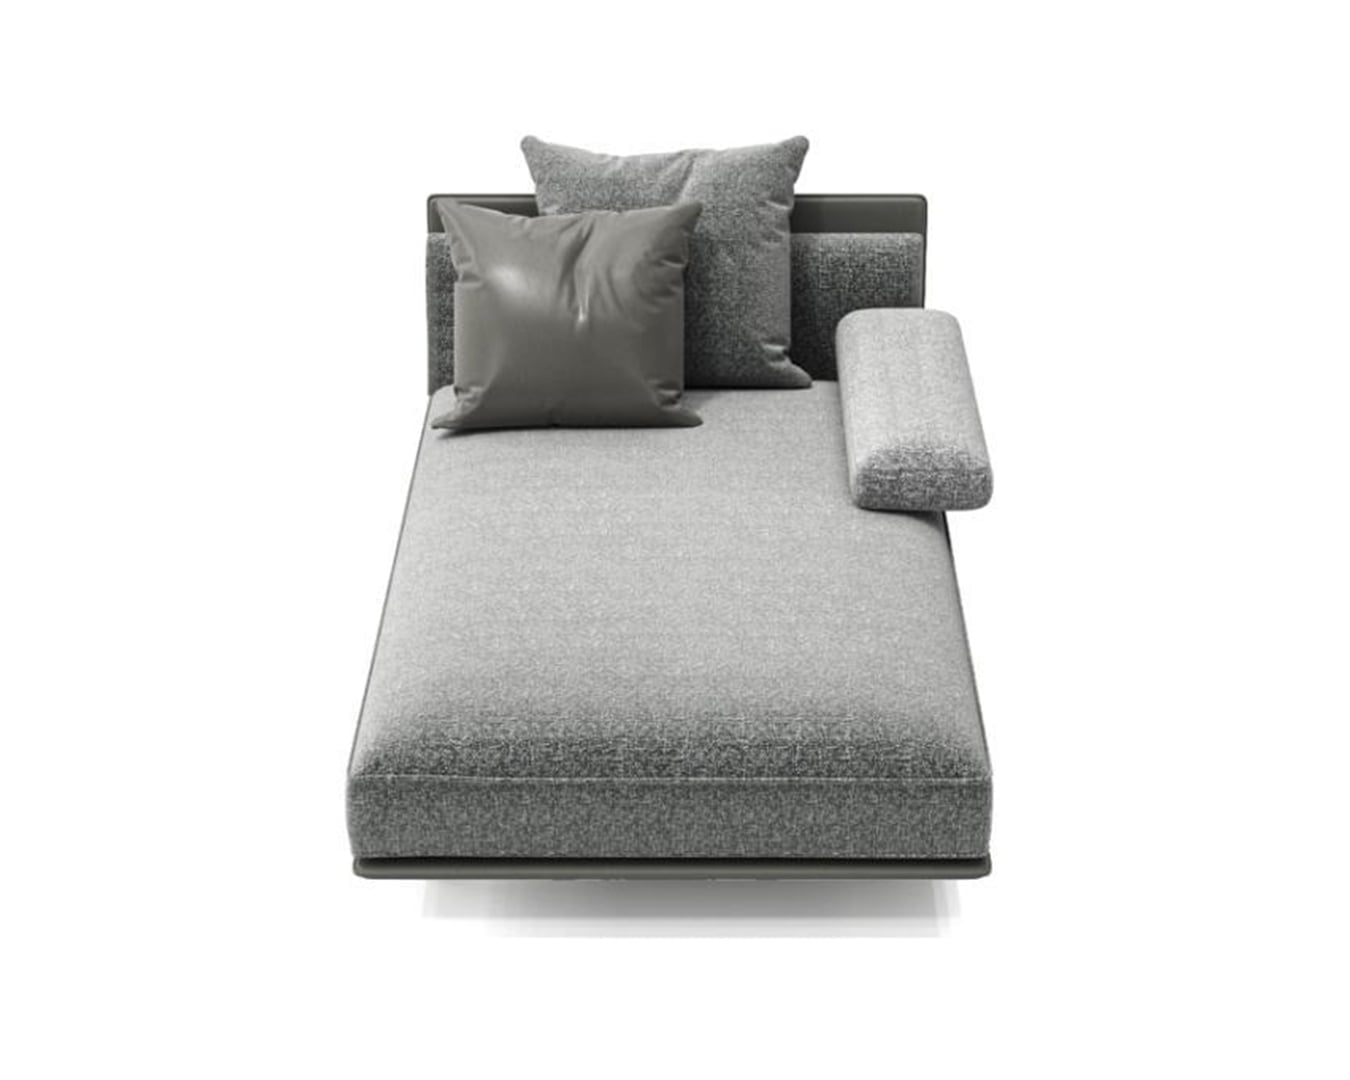 Sofa modern minimalis set grey long couch